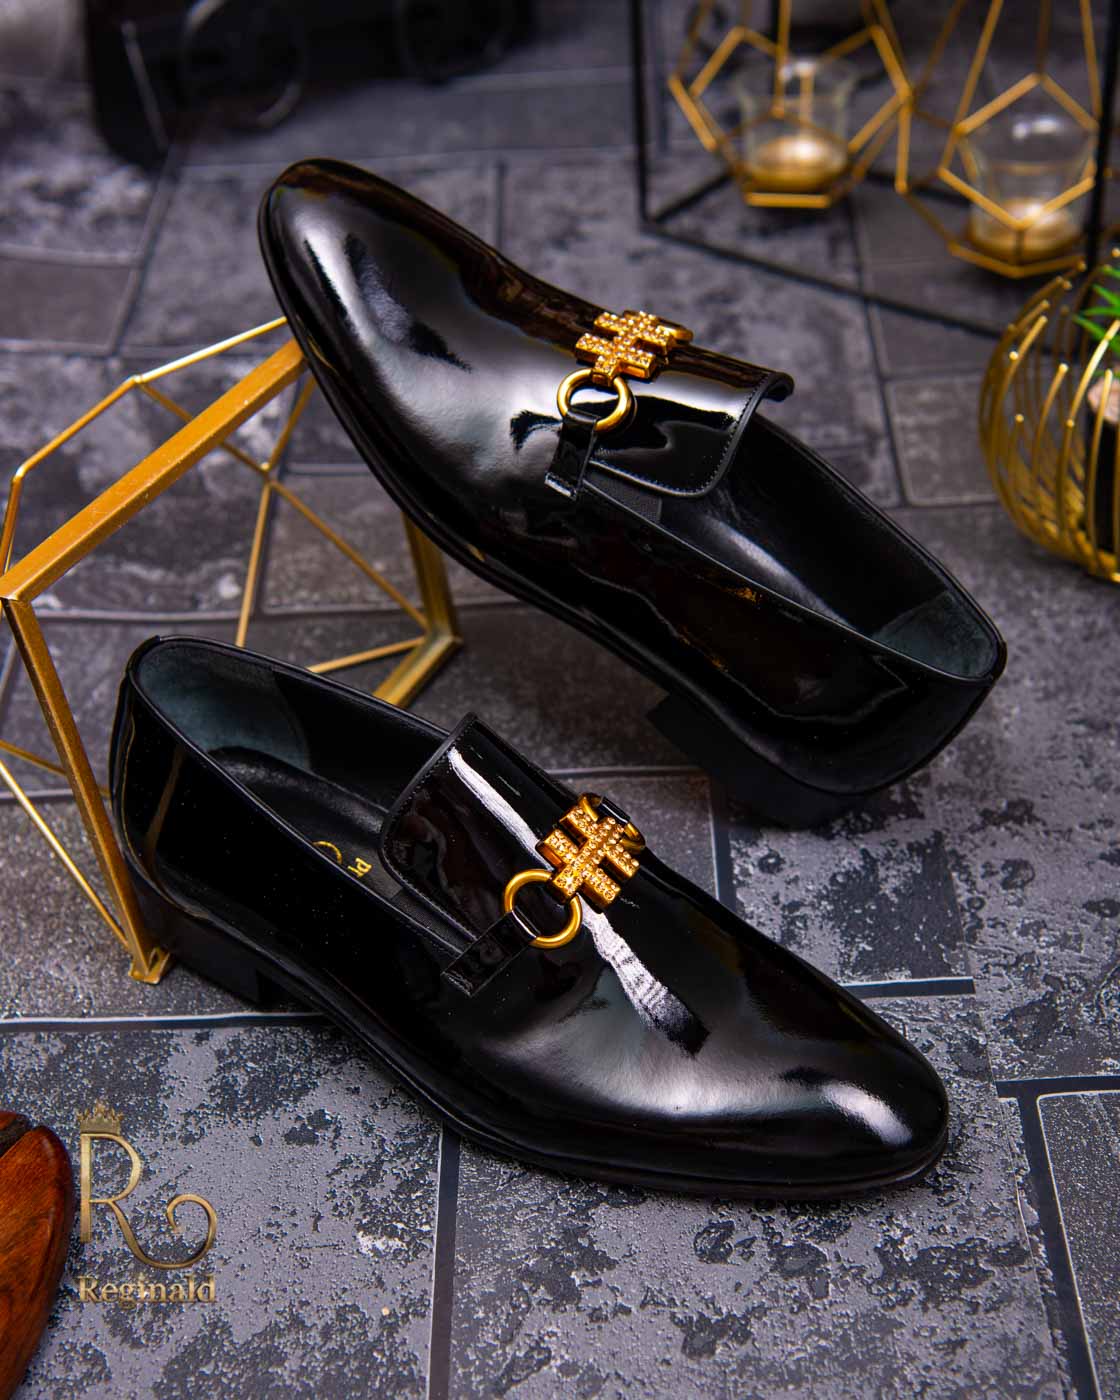 Pantofi Loafers de barbati din piele naturala, negri cu accesoriu auriu - P1357